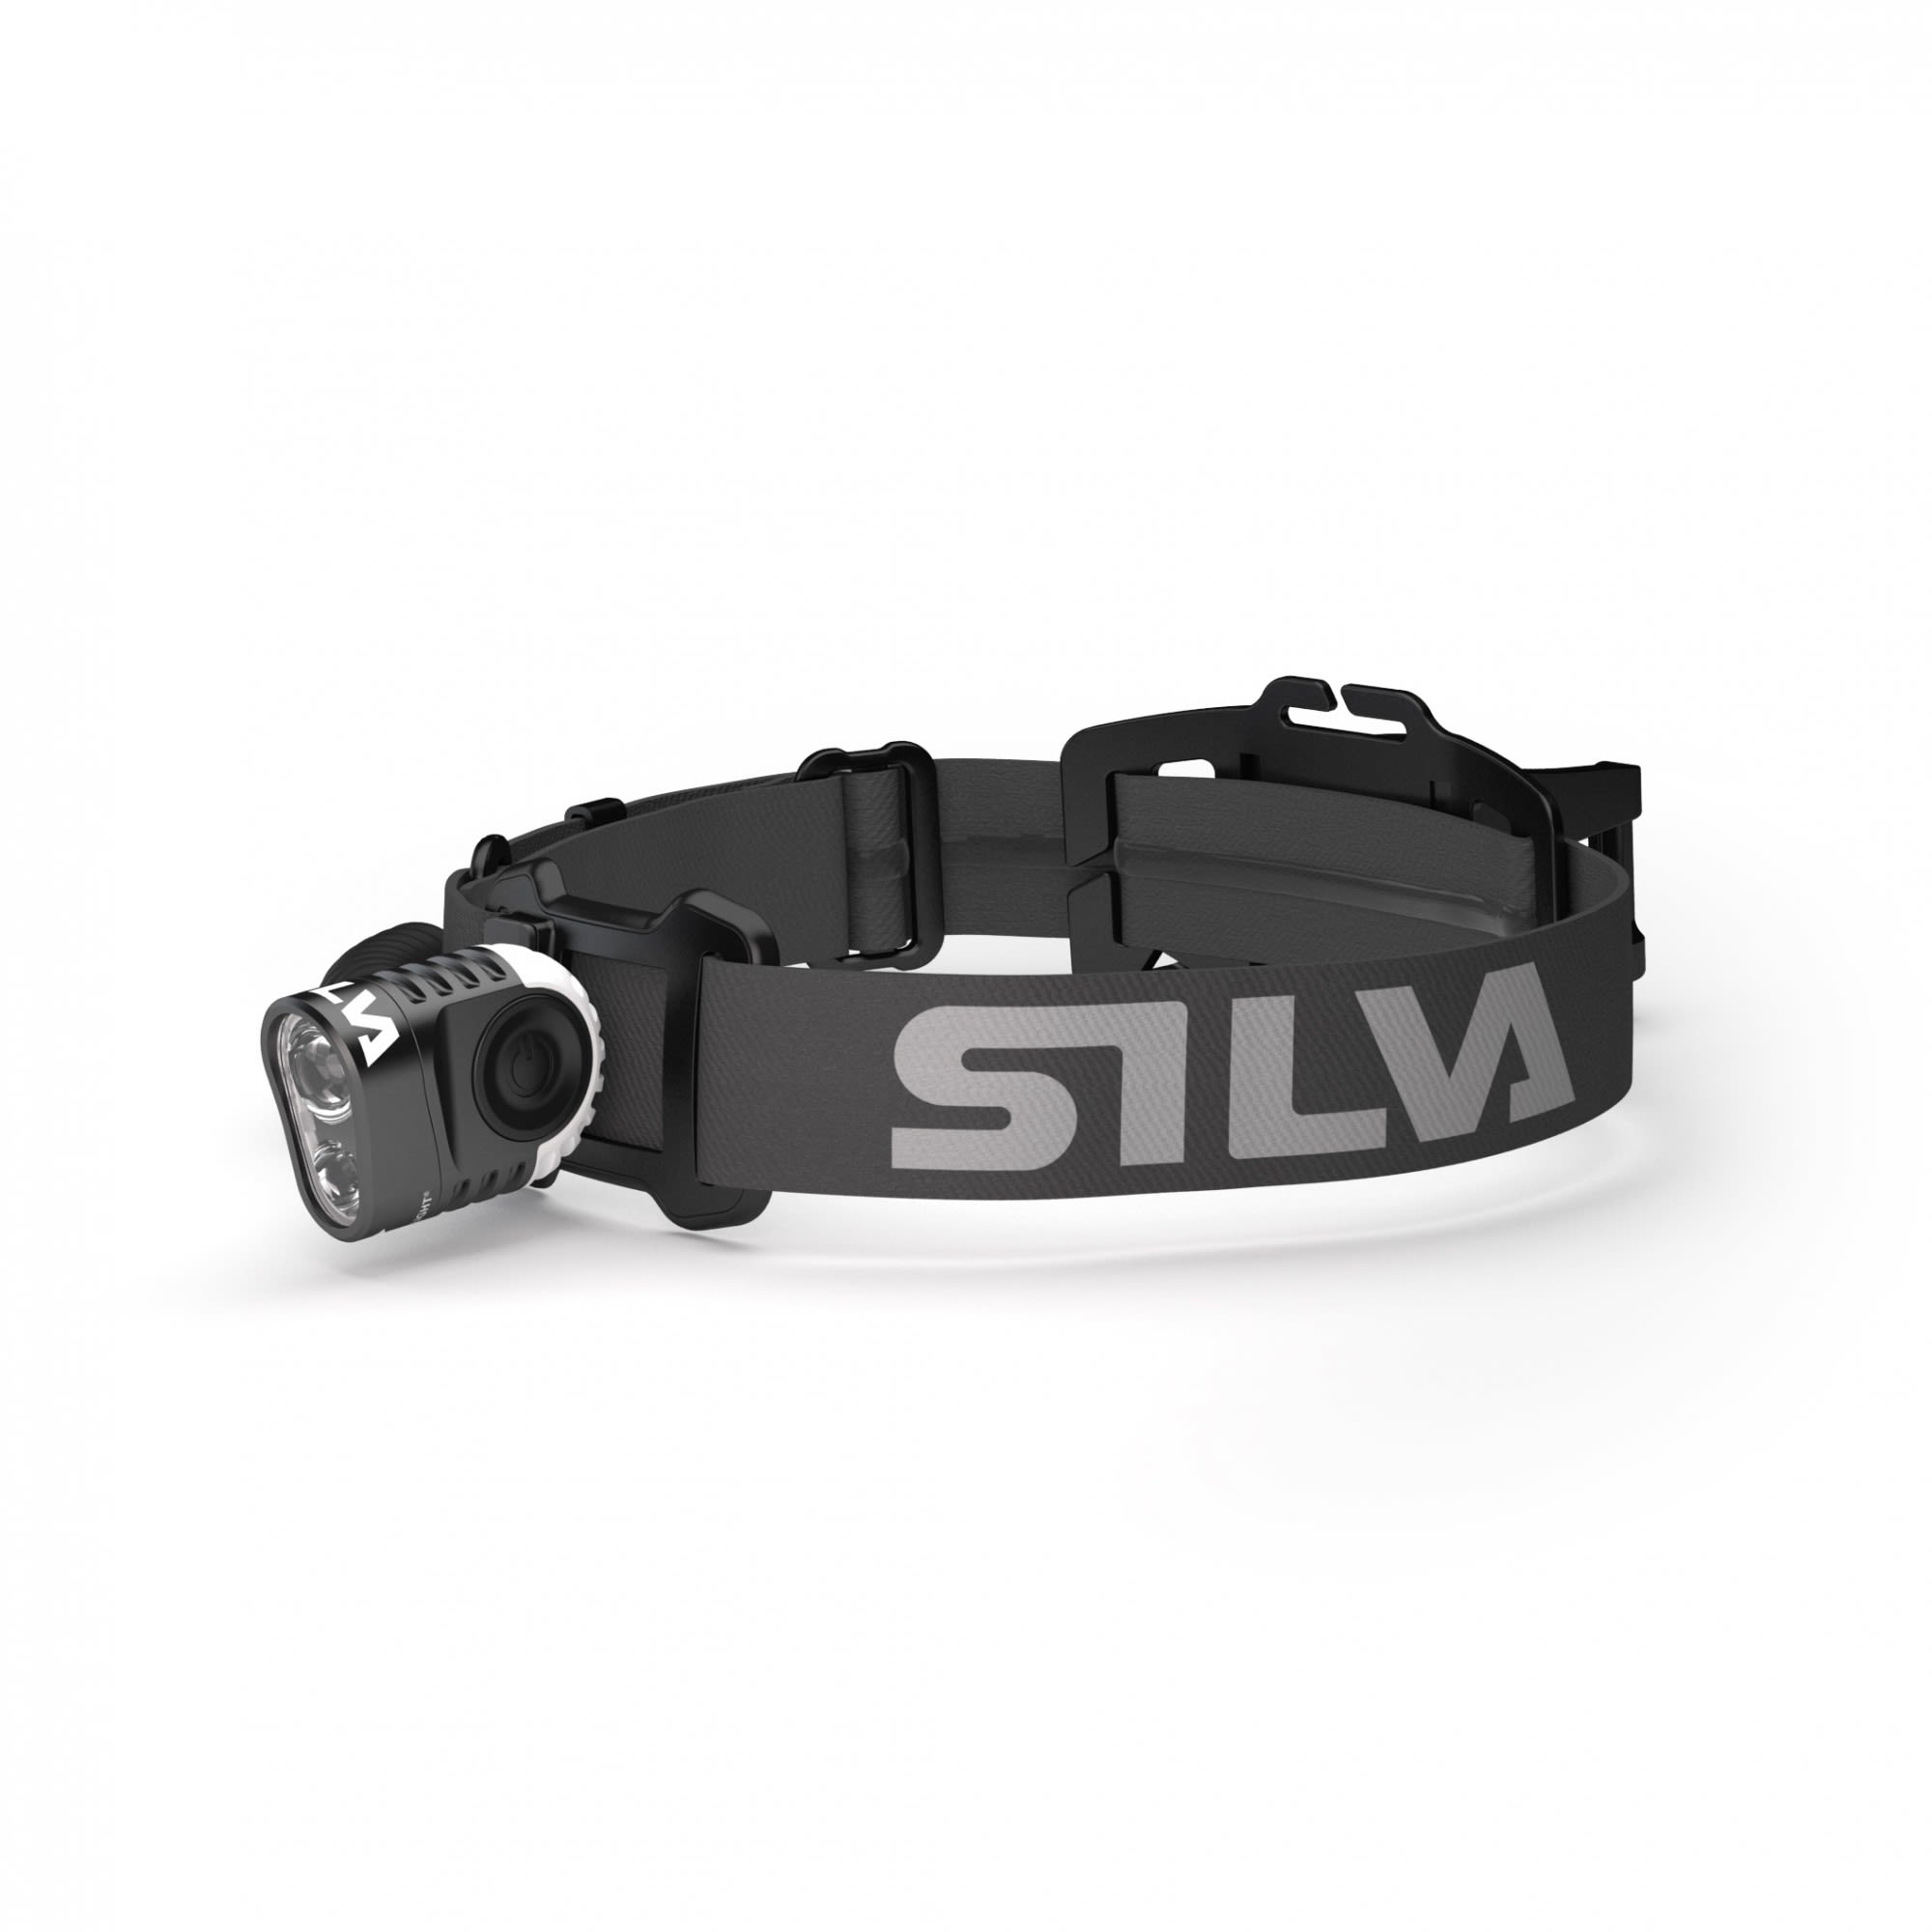 Silva Trail Speed 5XT Schwarz- Stirnlampen- Grsse One Size - Farbe Black